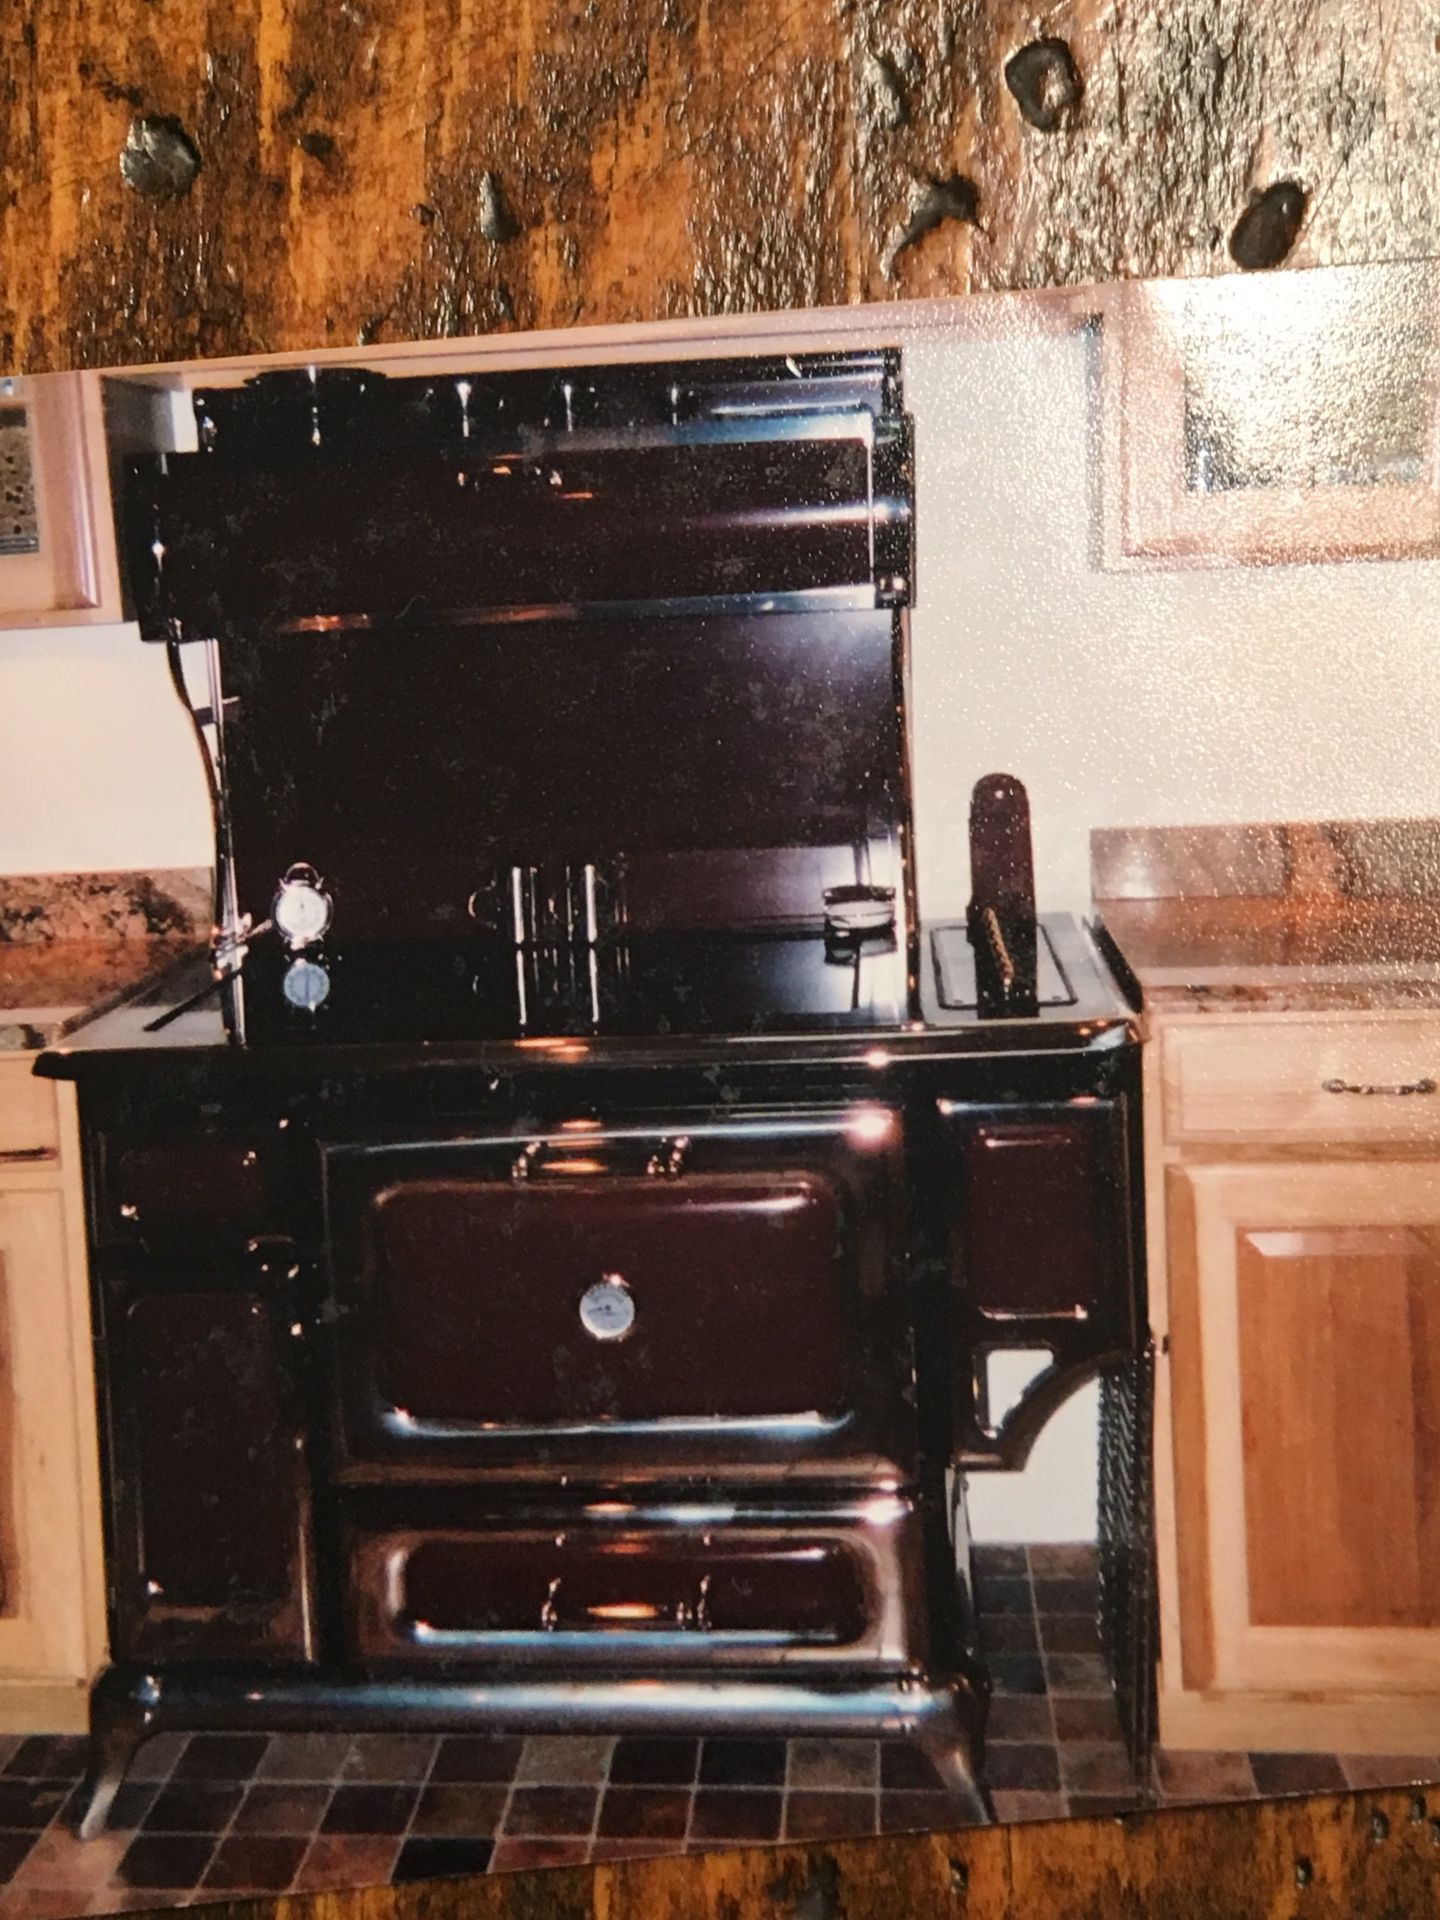 Heartland electric stove